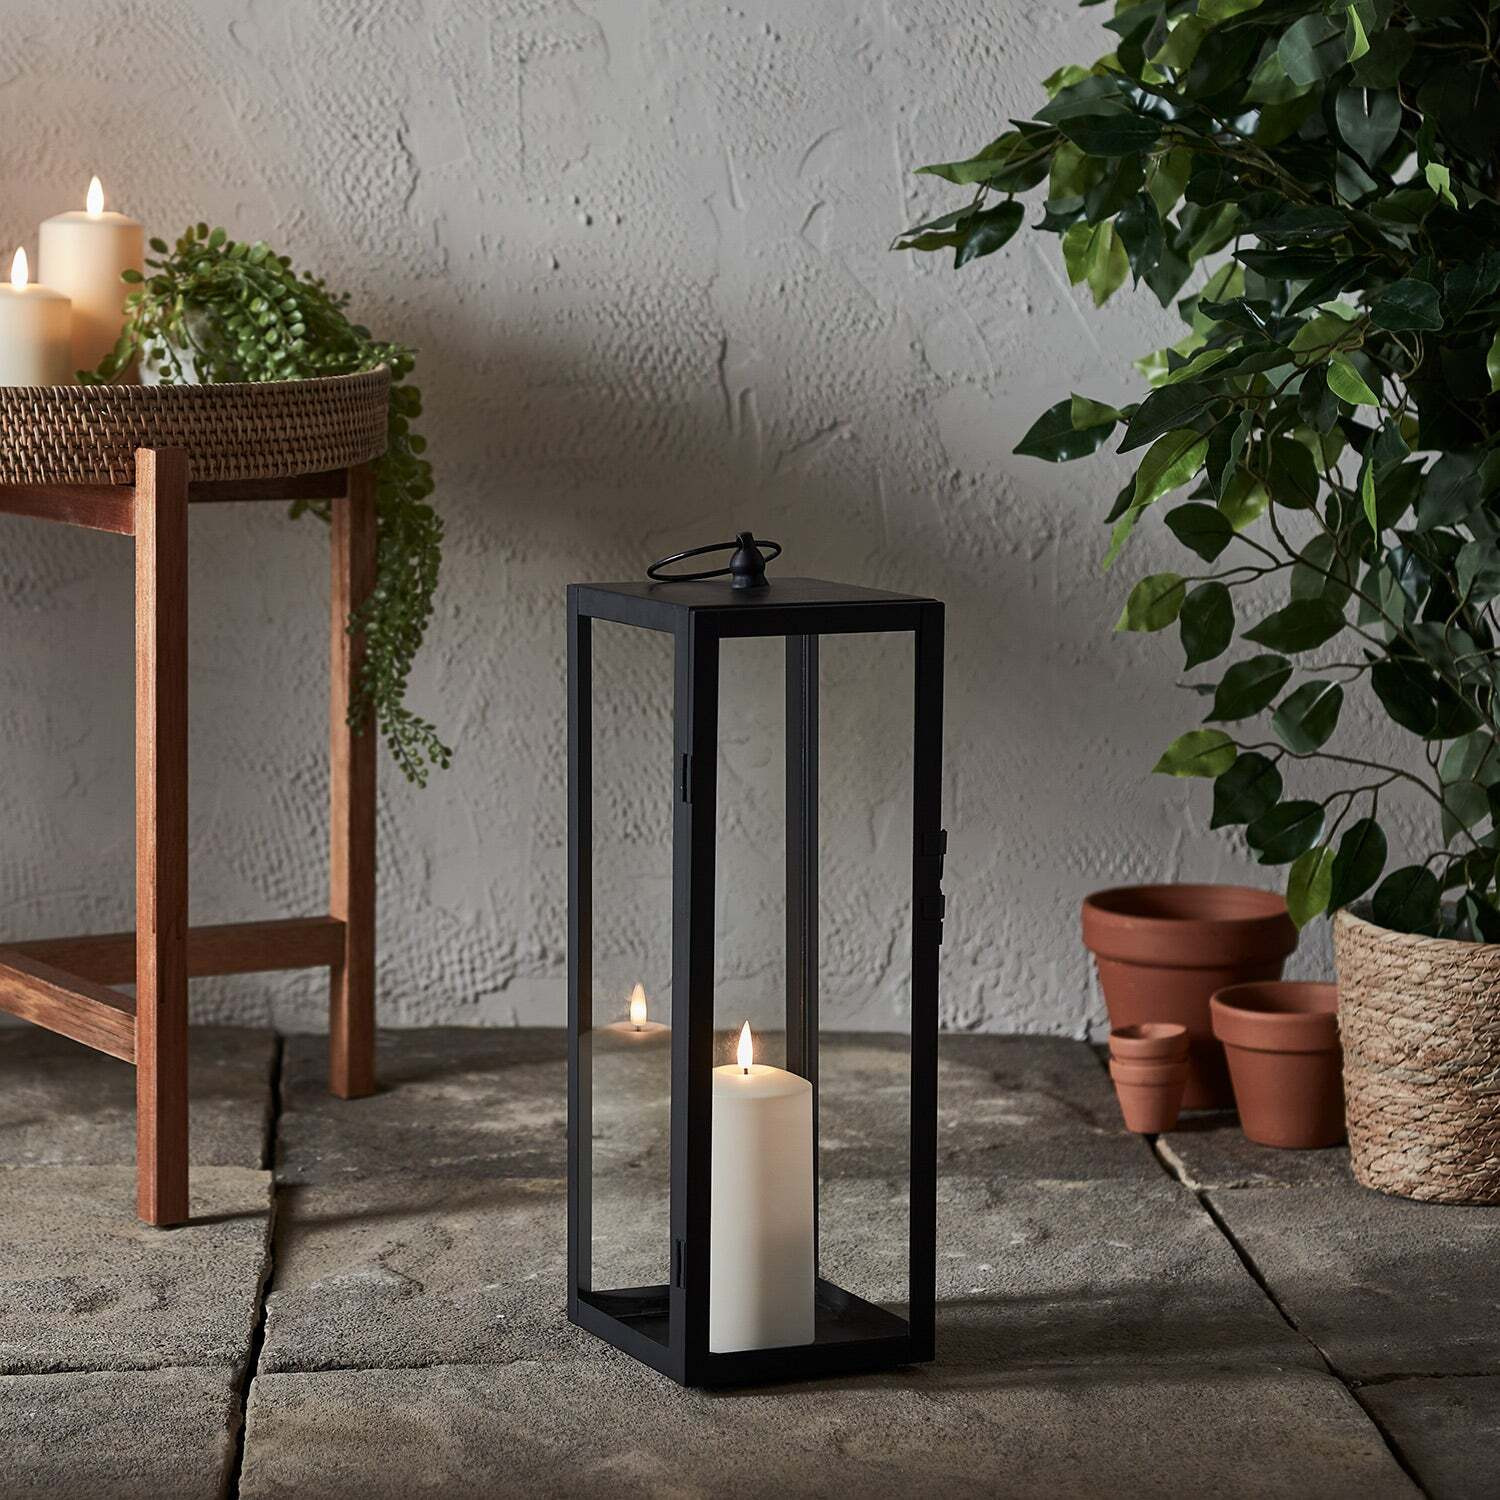 Bowen Large Black Garden Lantern with White TruGlow® Candle - image 1